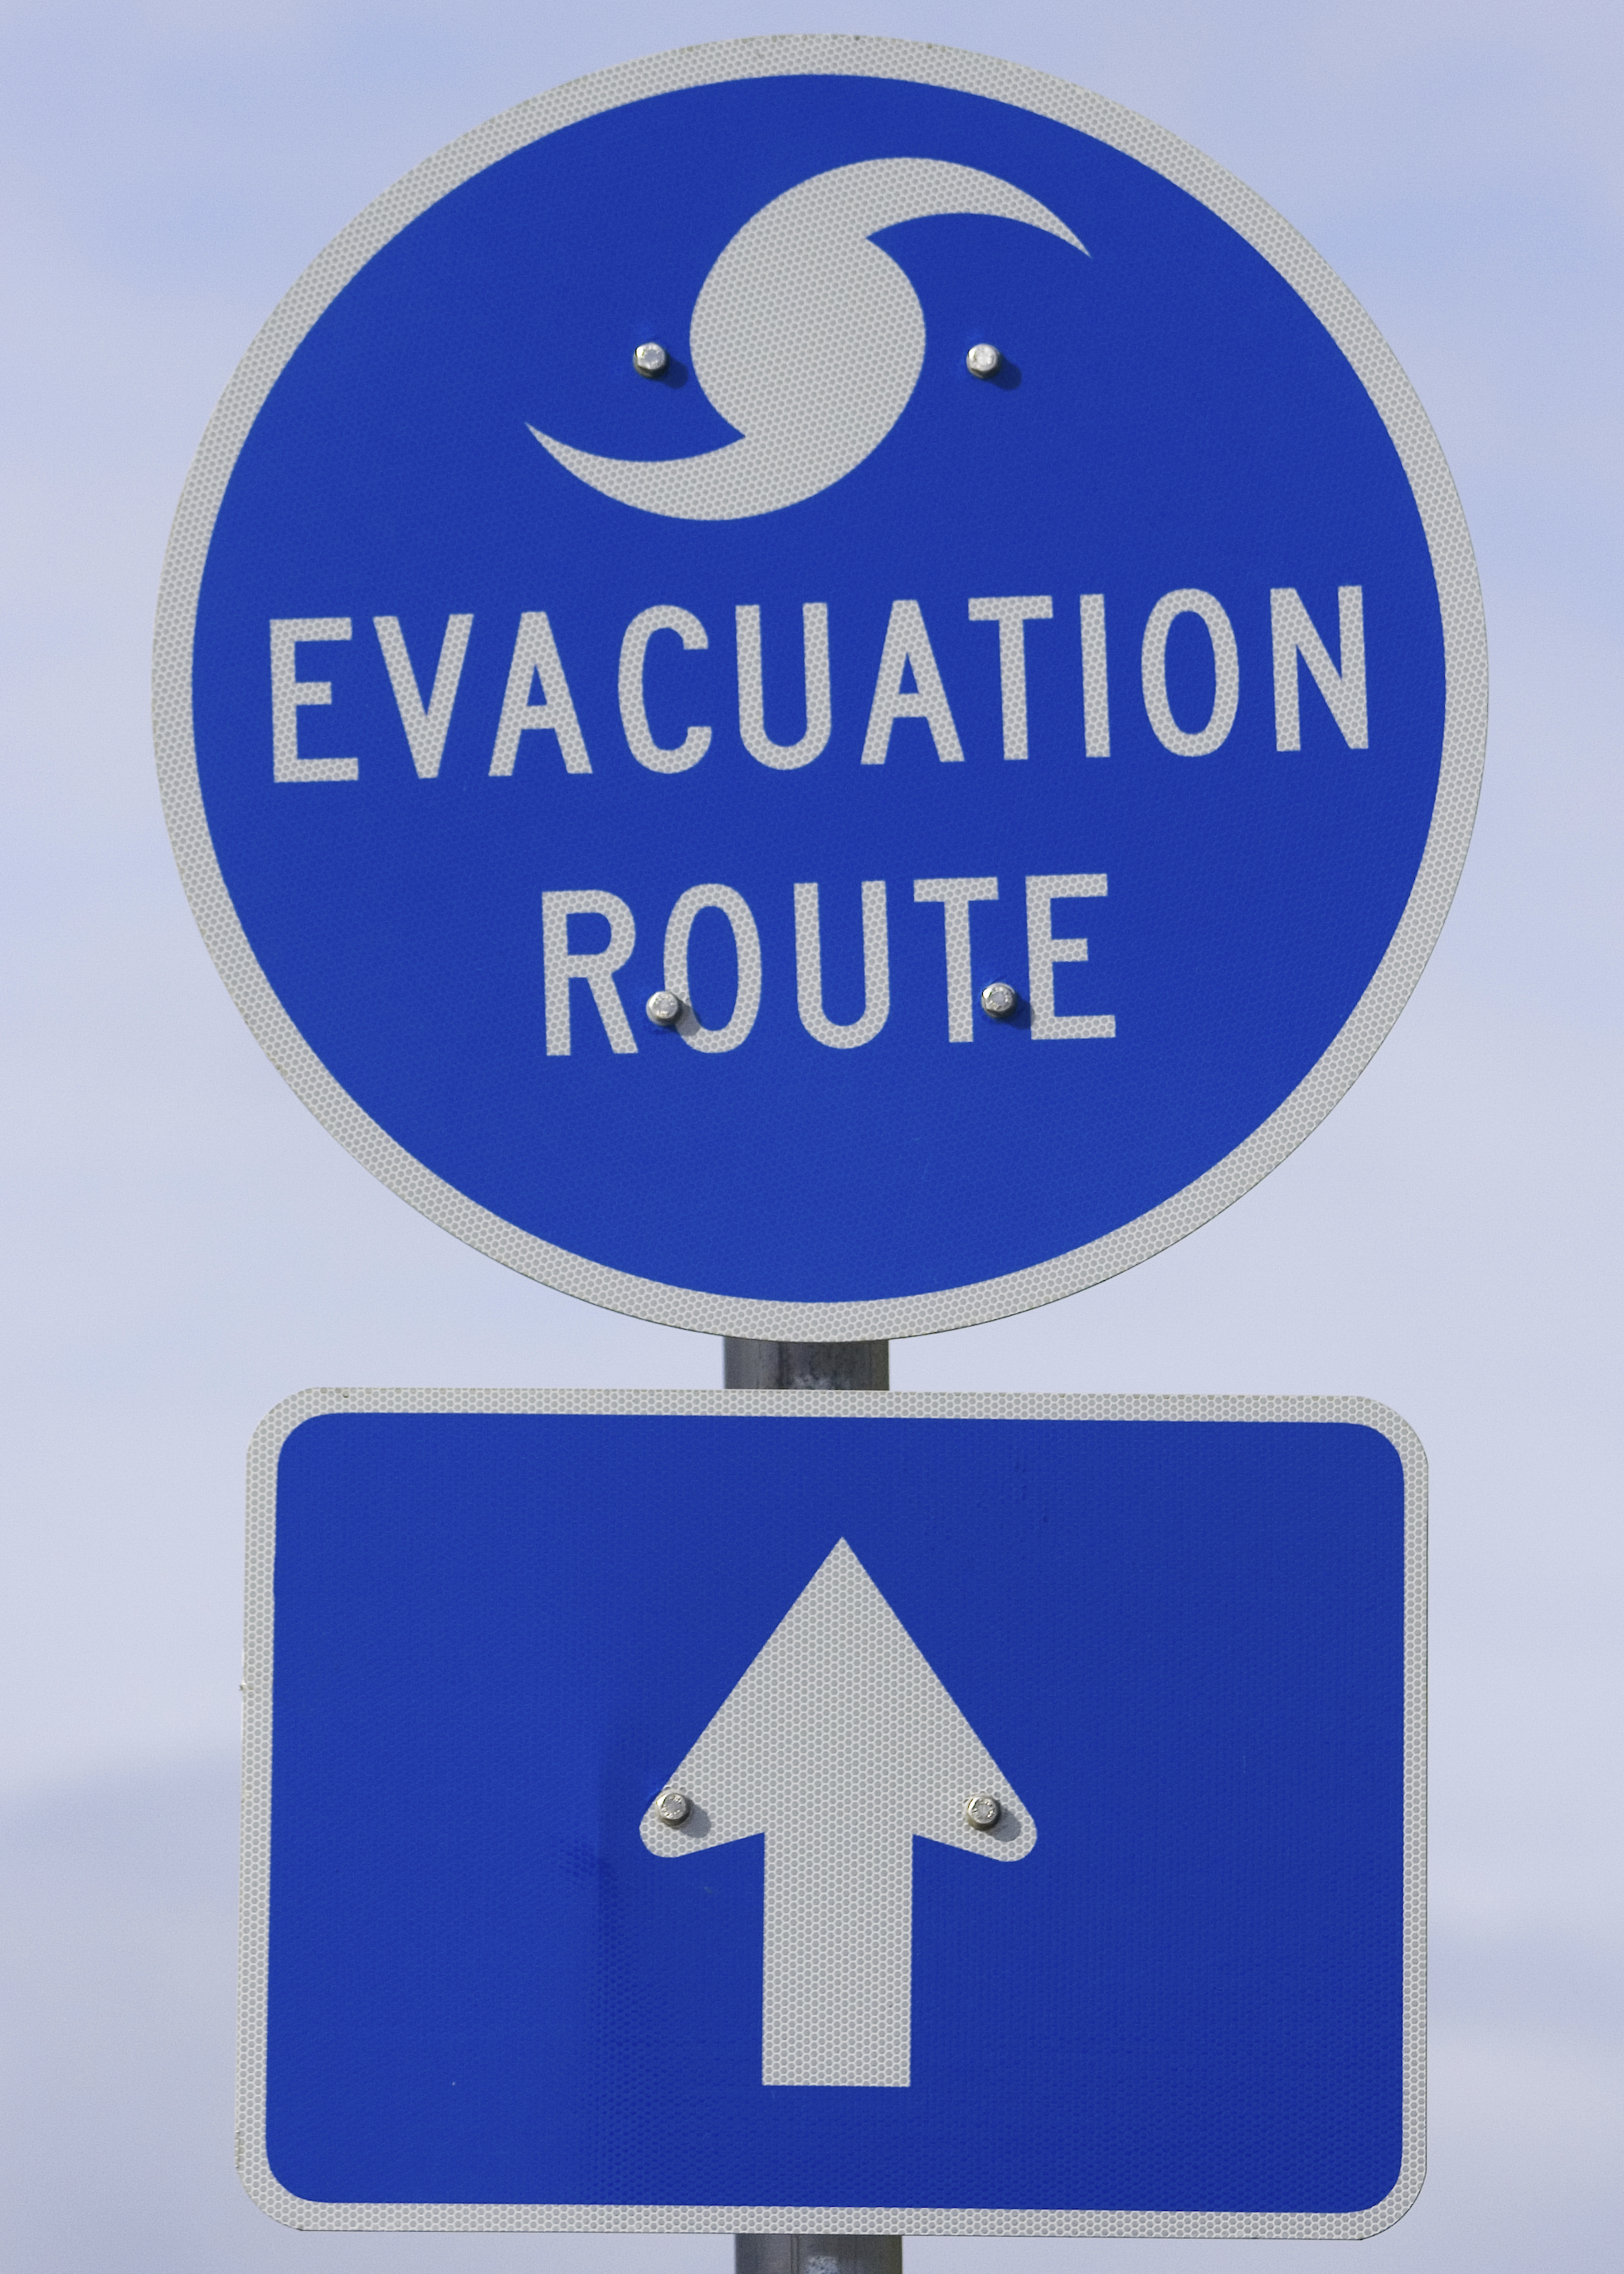 Evacuation route sign_iStock_000002682555_Large.jpg